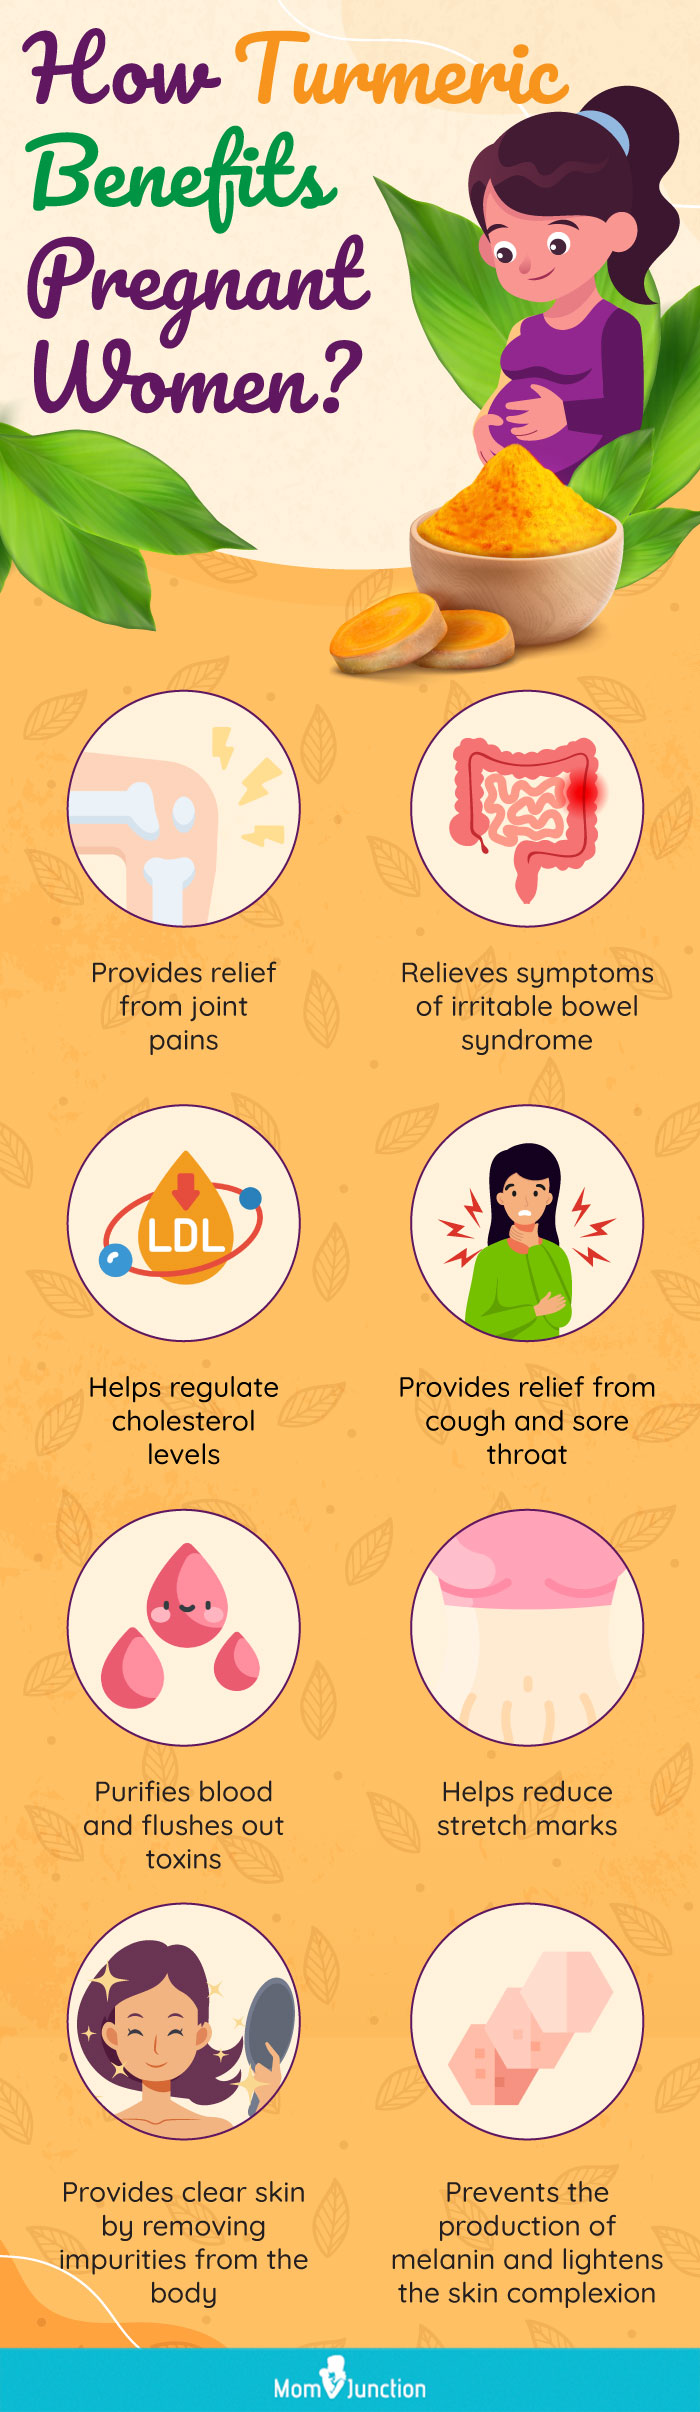 how turmeric benefits pregnant women [infographic]